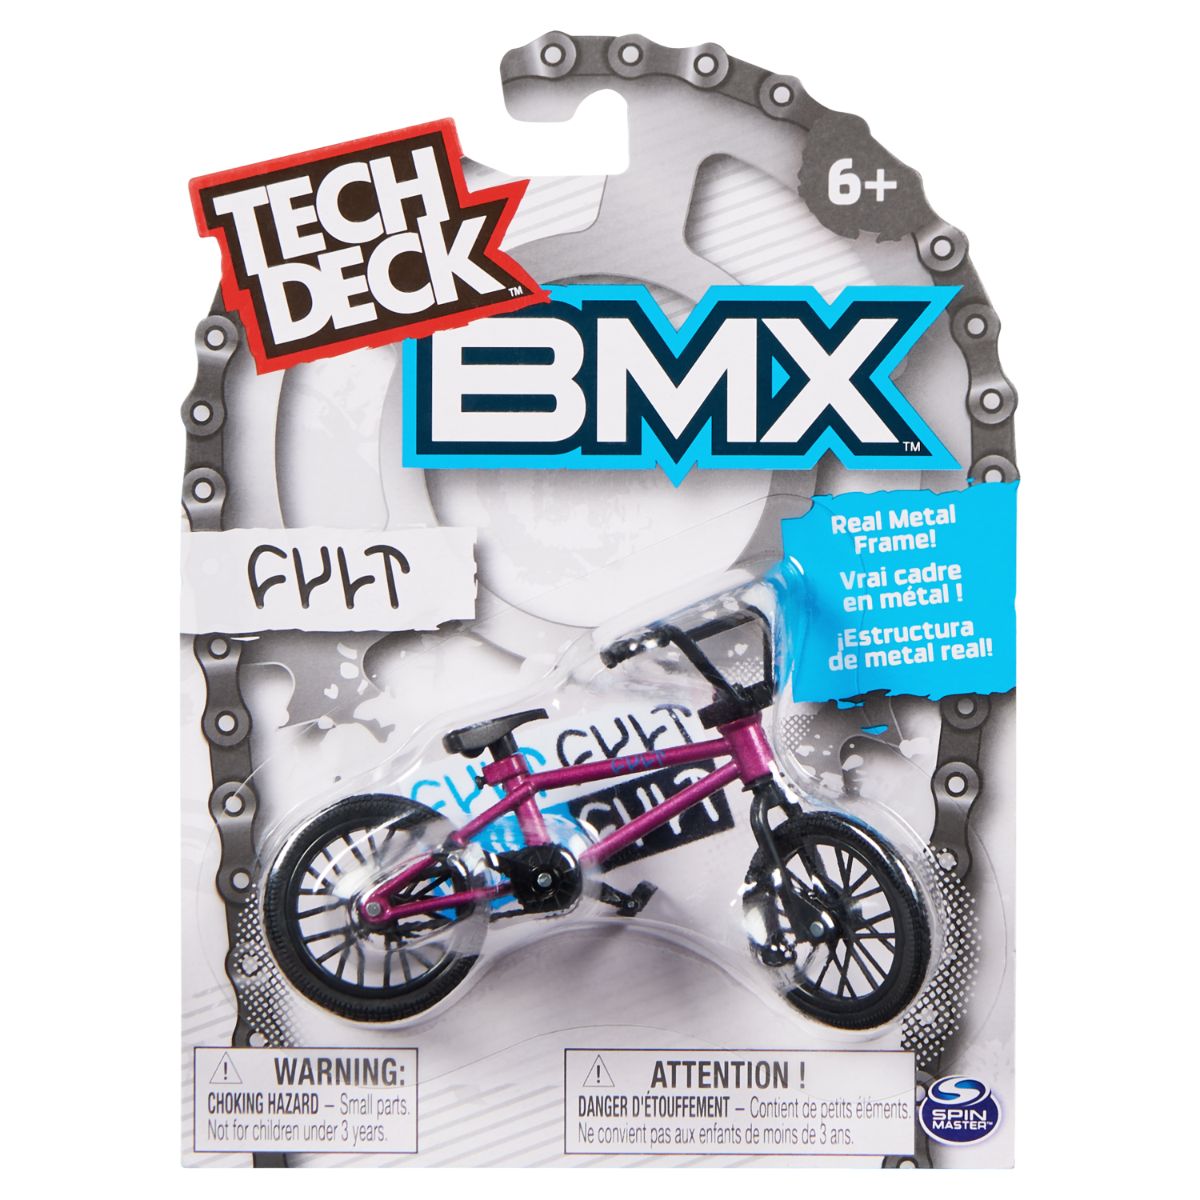 delicacy Pounding specification Mini BMX bike, Tech Deck, Cult, 20140824 - protejamcopilaria.ro